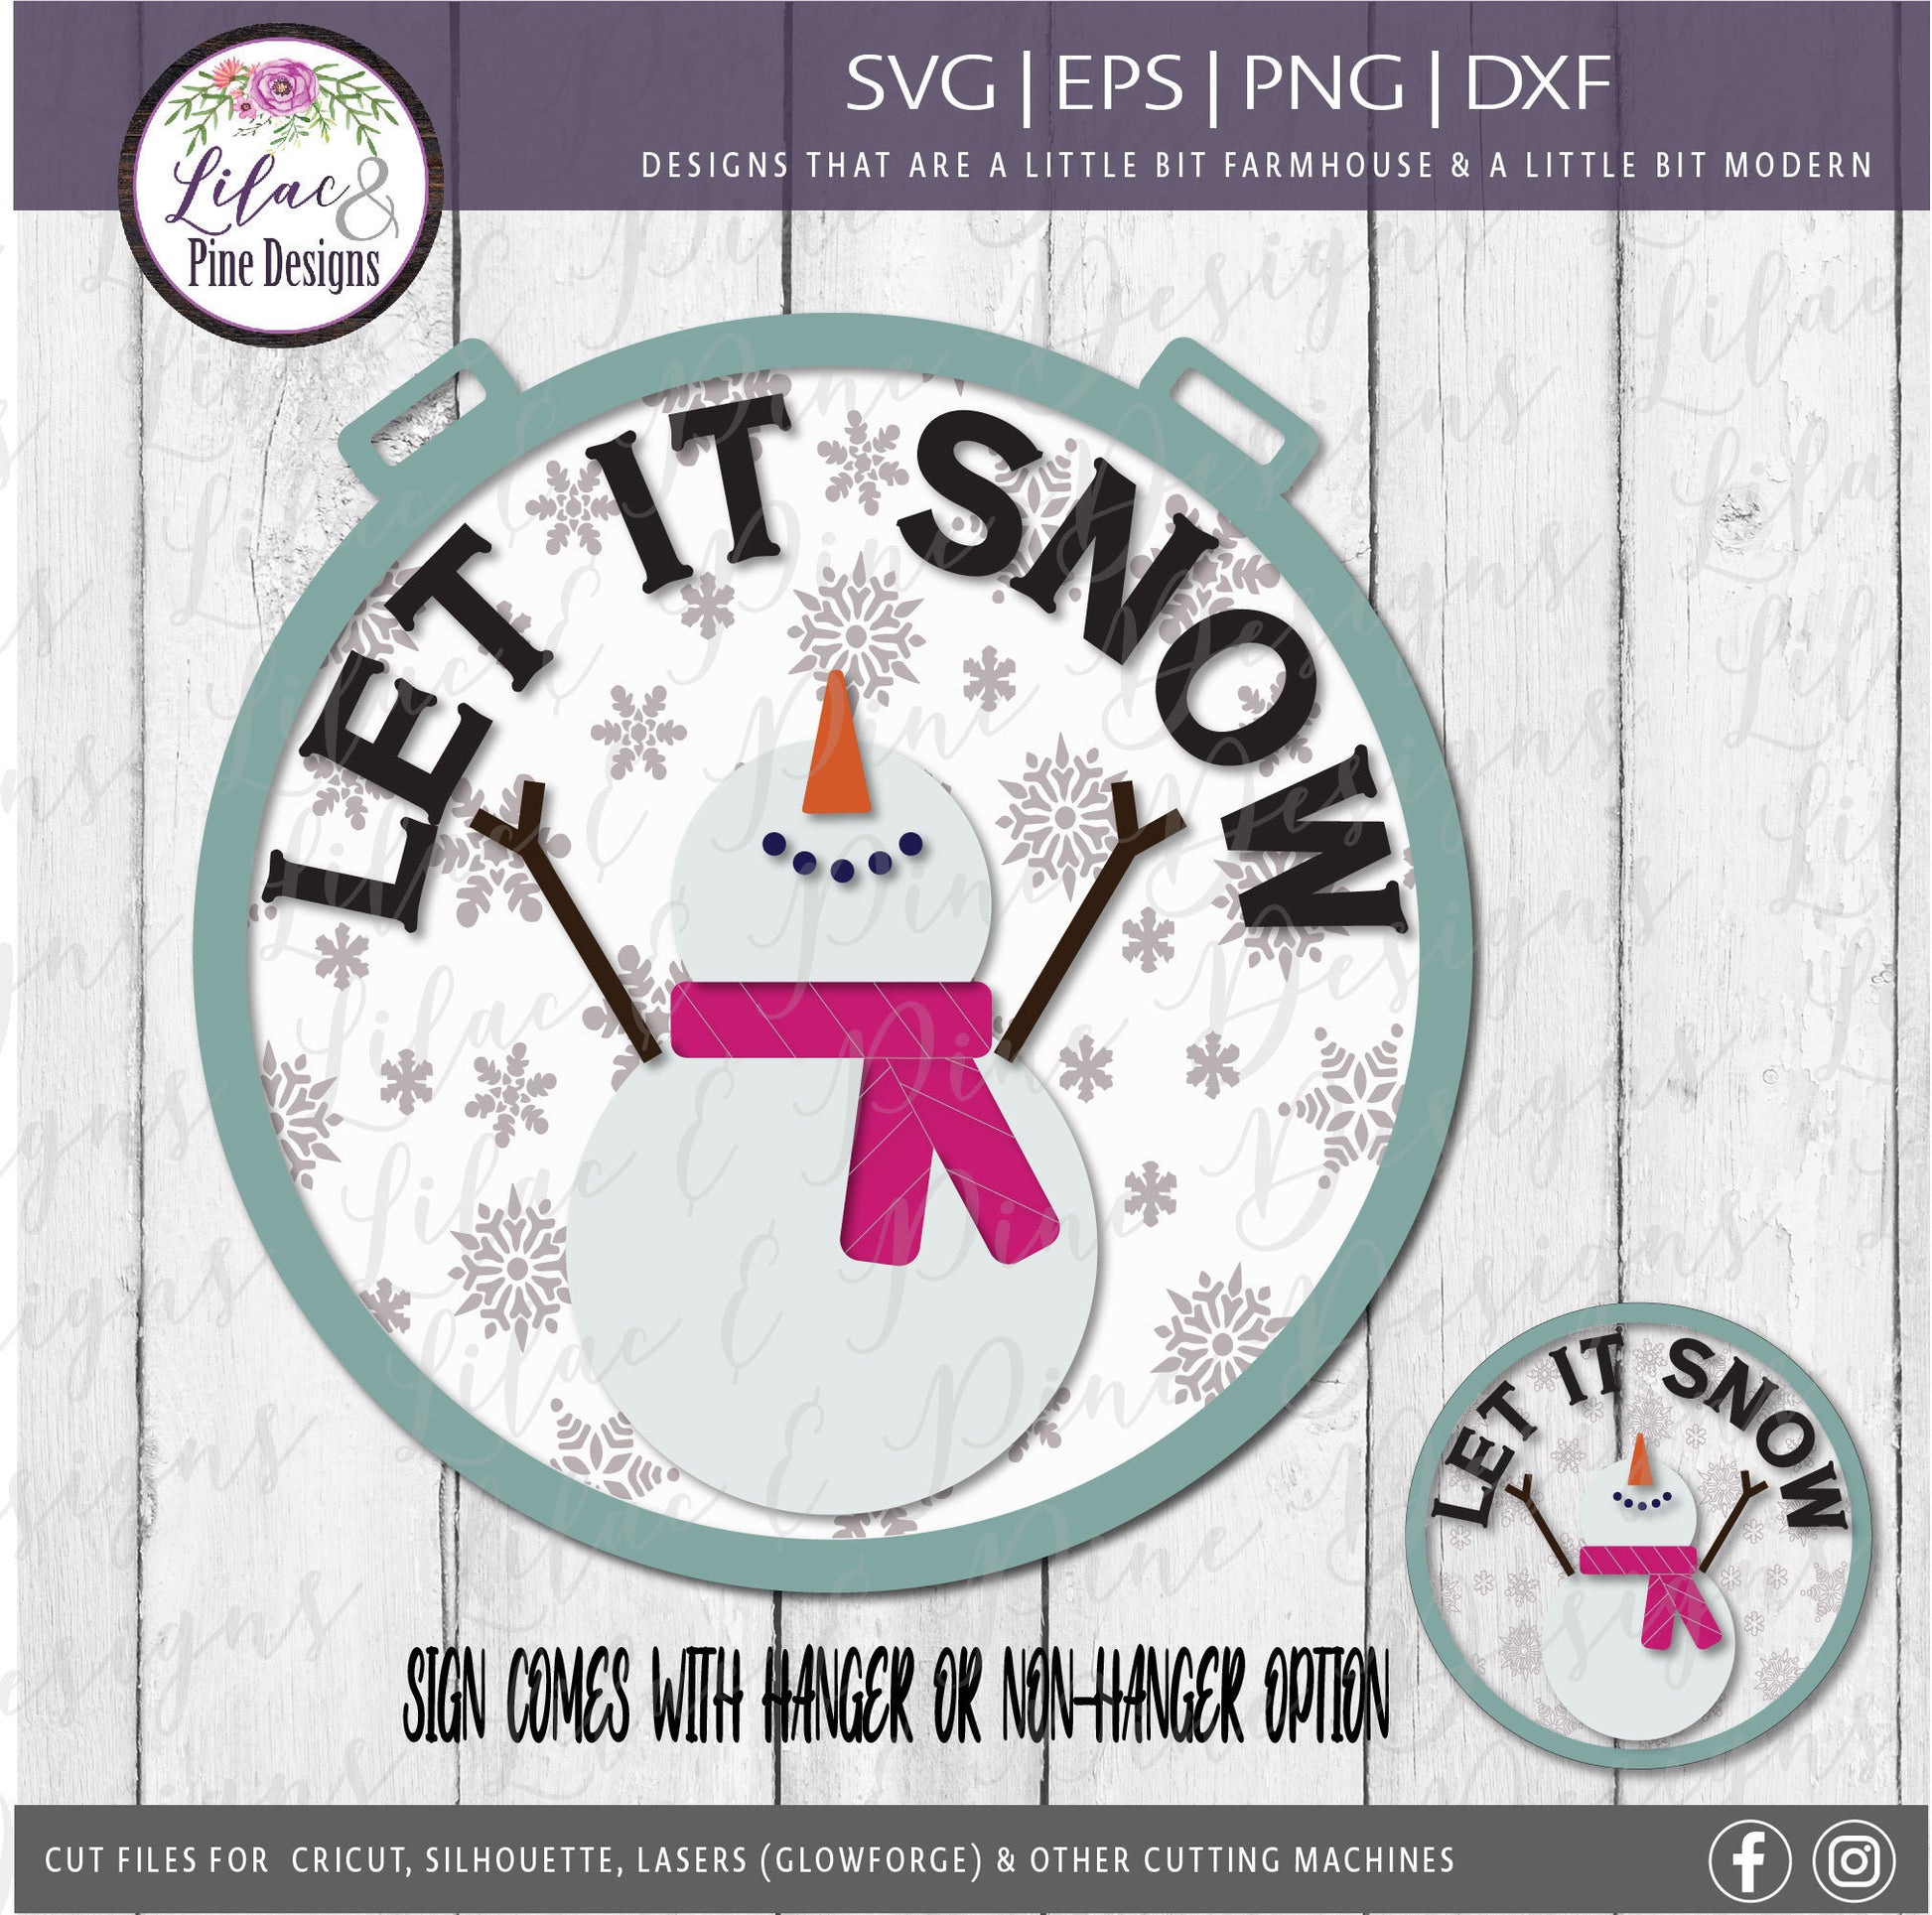 Let it Snow SVG, Snowman sign SVG, Christmas SVG, Winter Svg, Holiday decor, farmhouse Christmas Svg, Christmas sign Svg, laser cut file